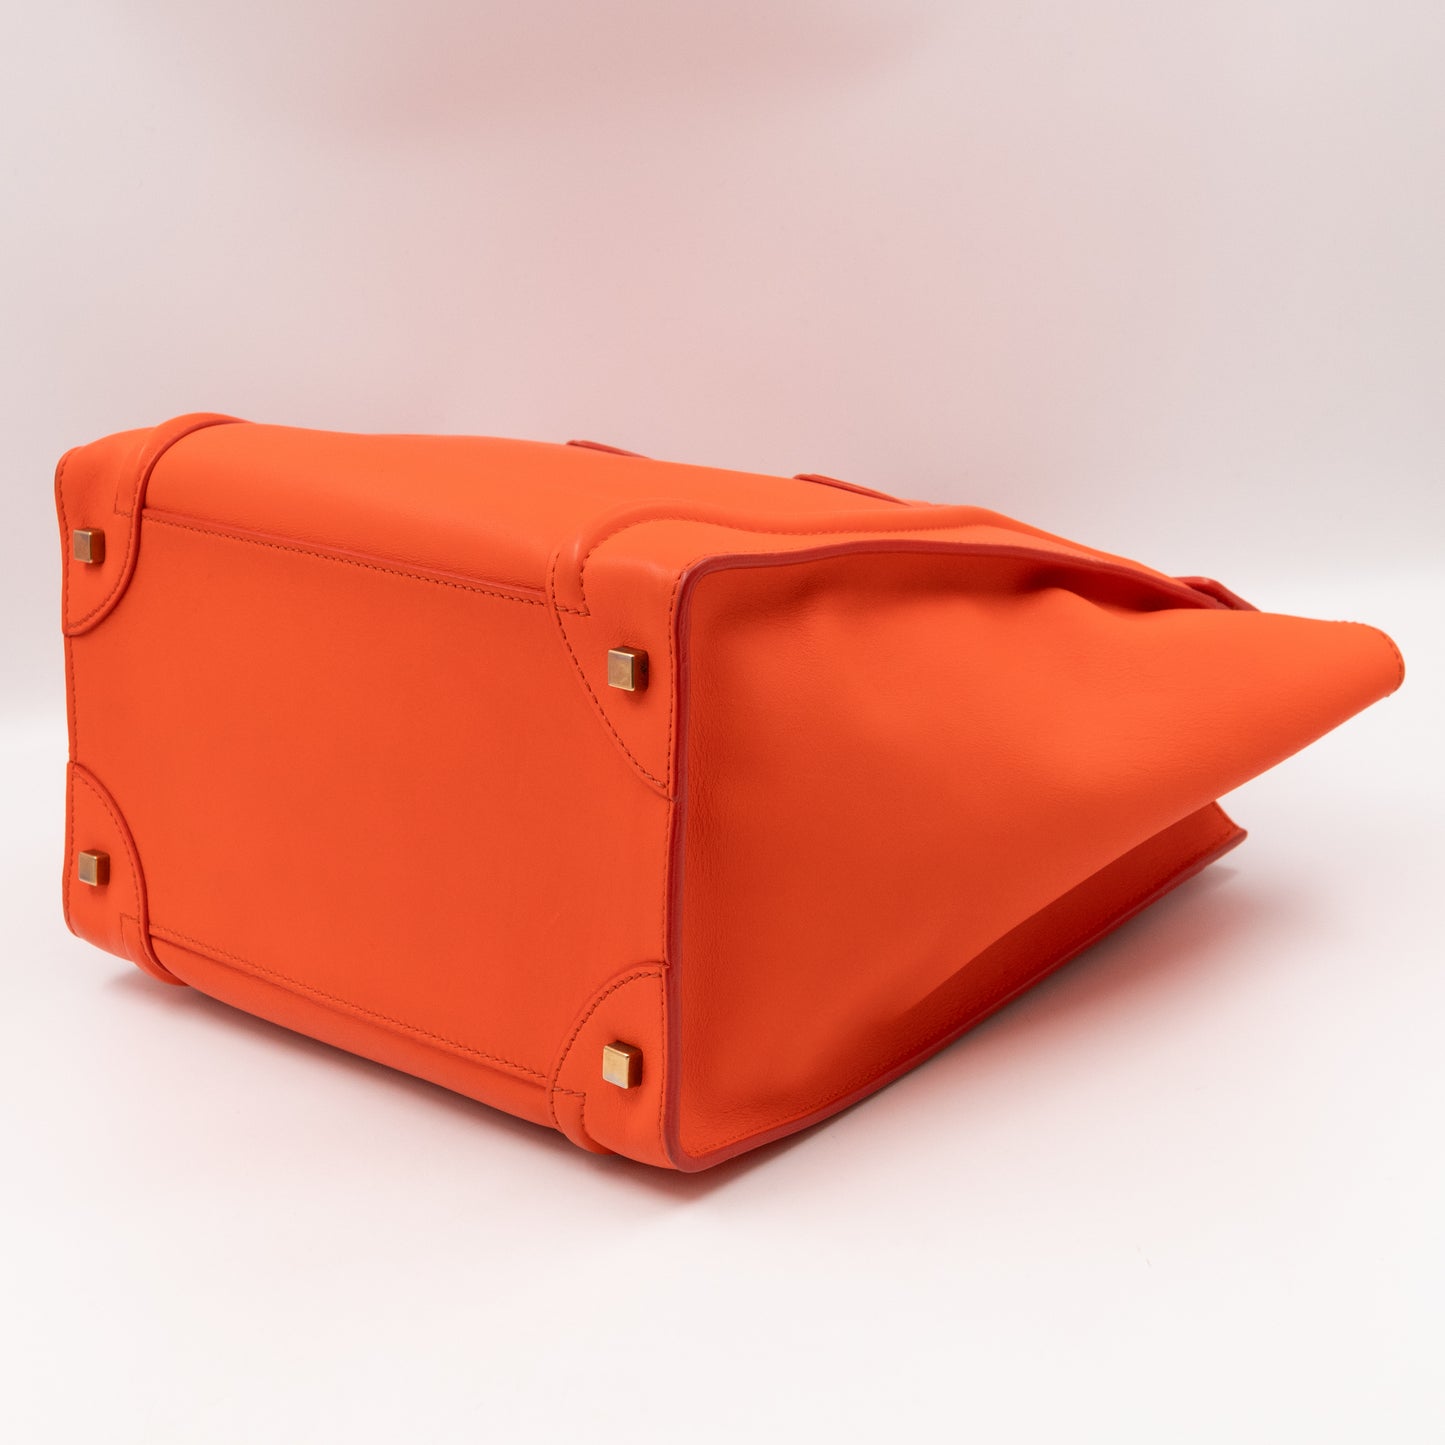 Mini Luggage Orange Leather